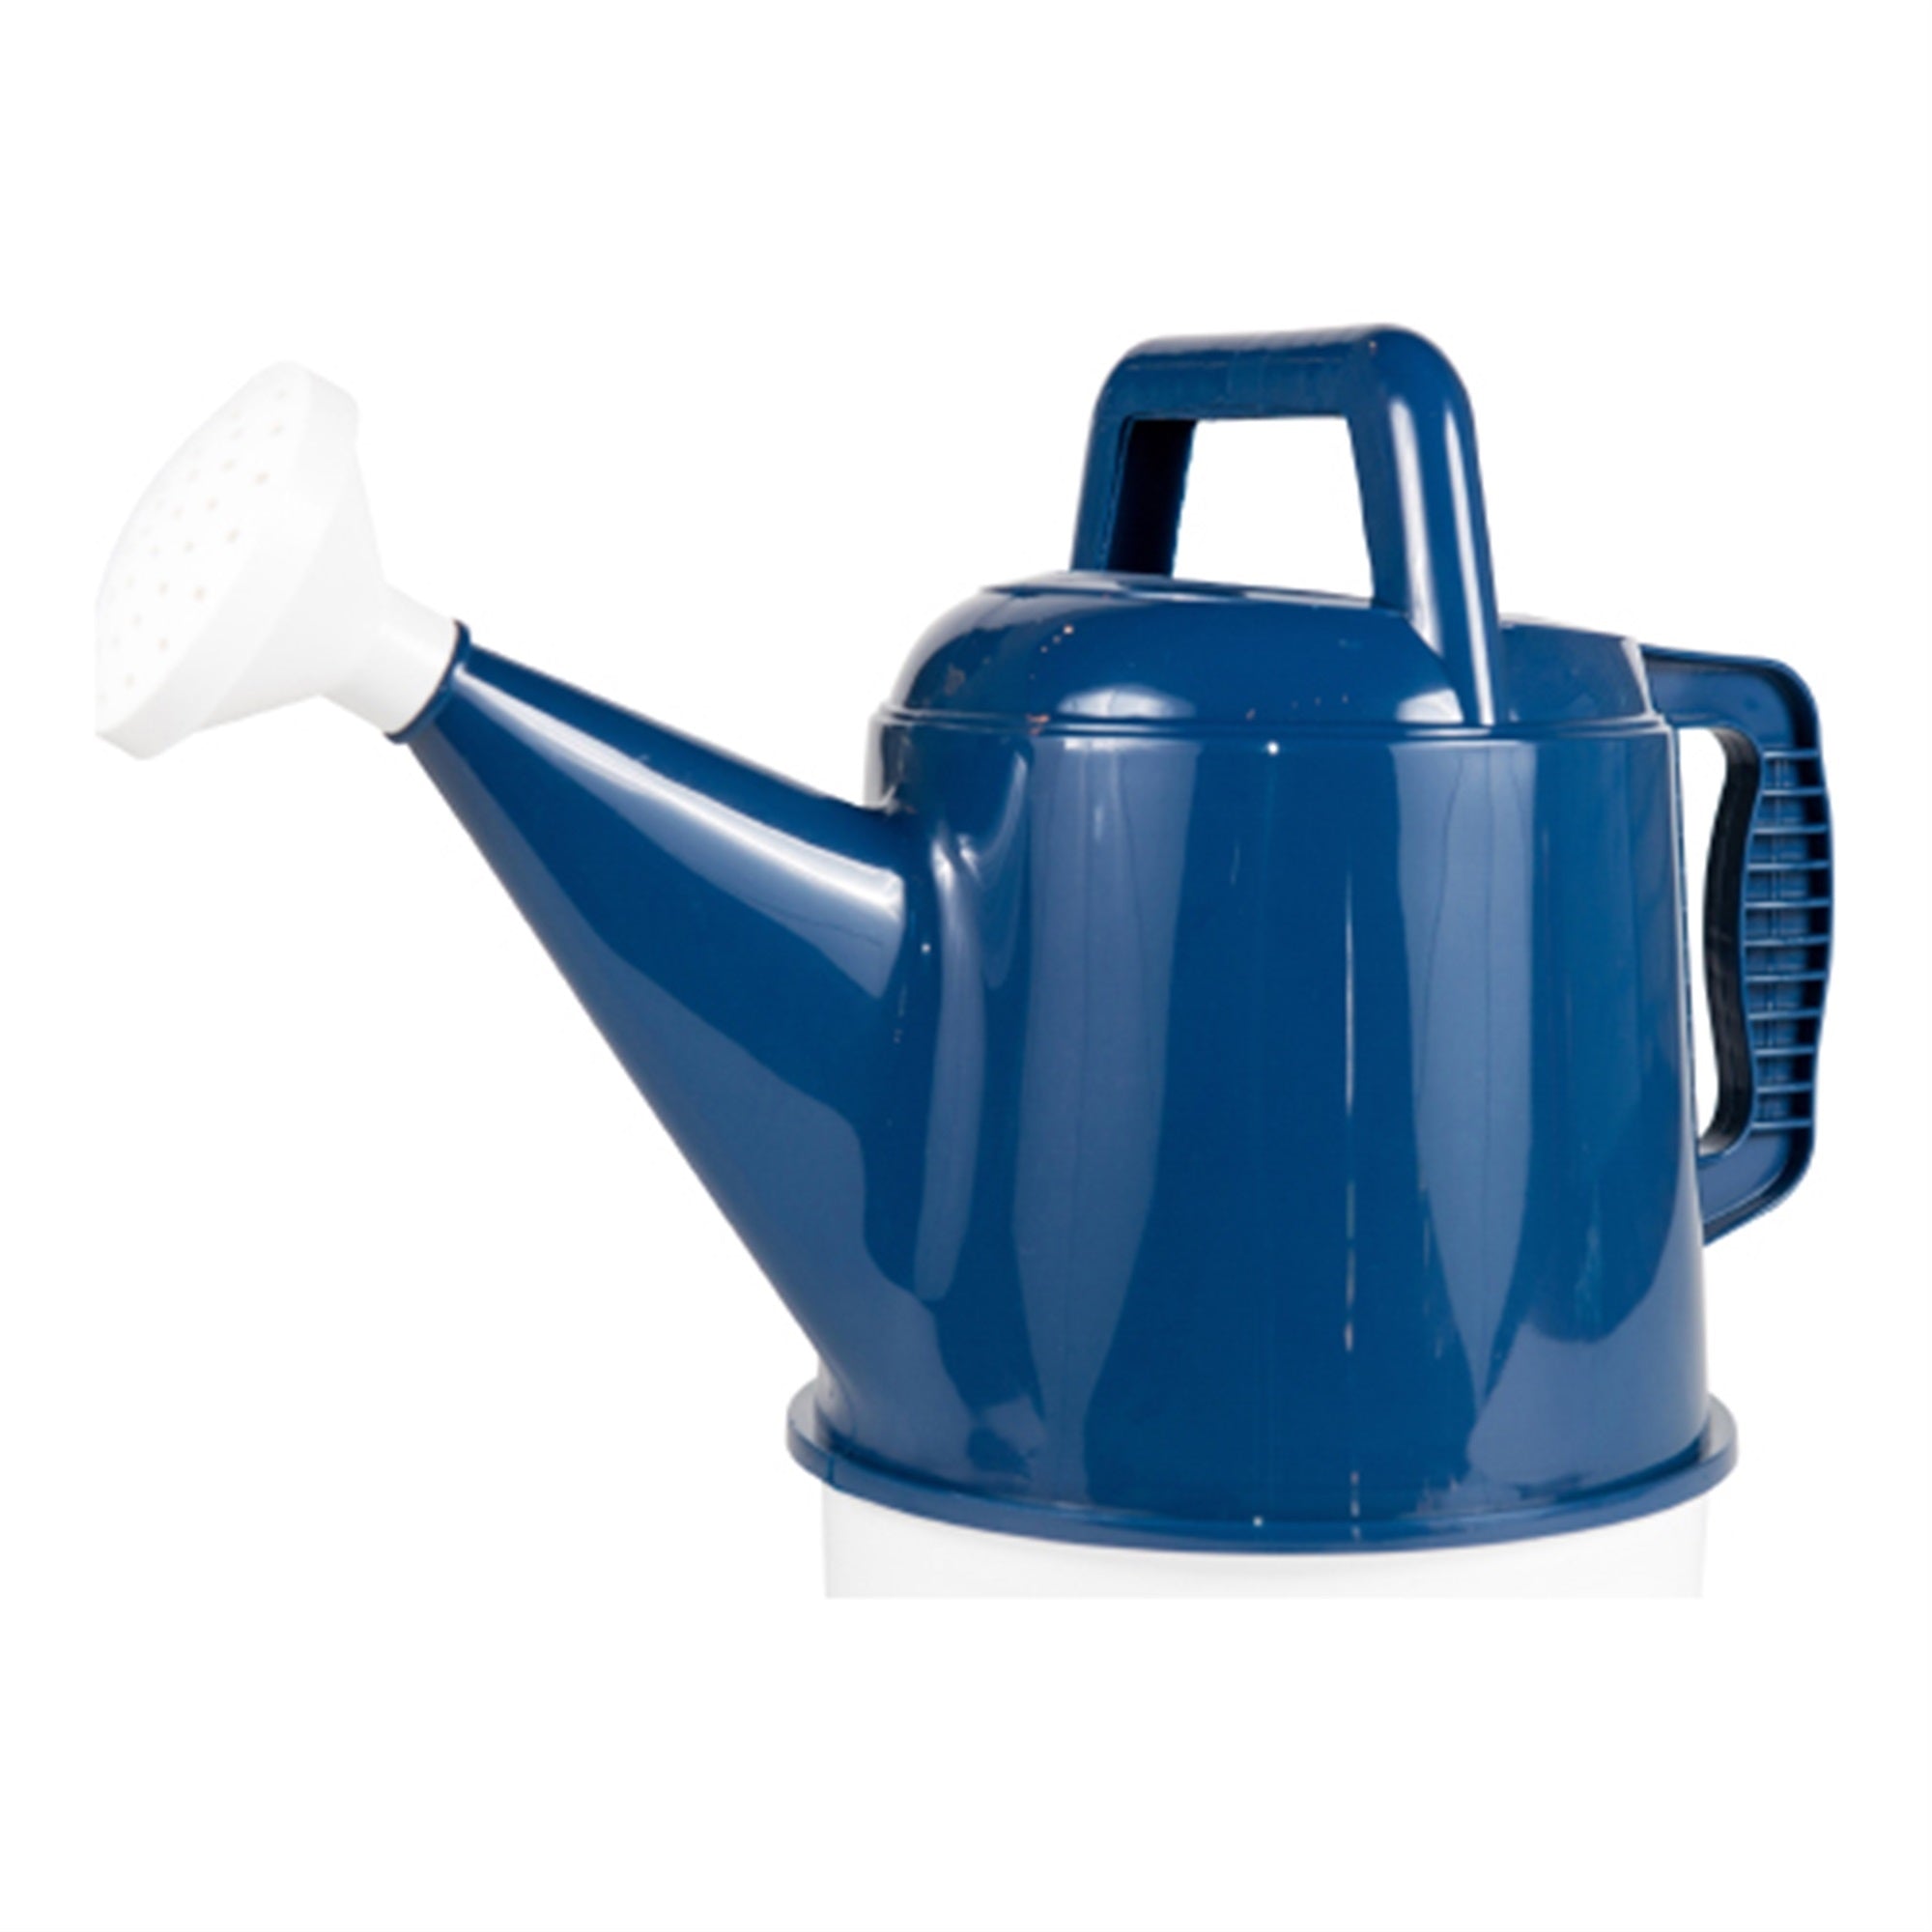 Bloem Deluxe Plastic Watering Can, Classic Blue, 2.5 Gallon Capacity